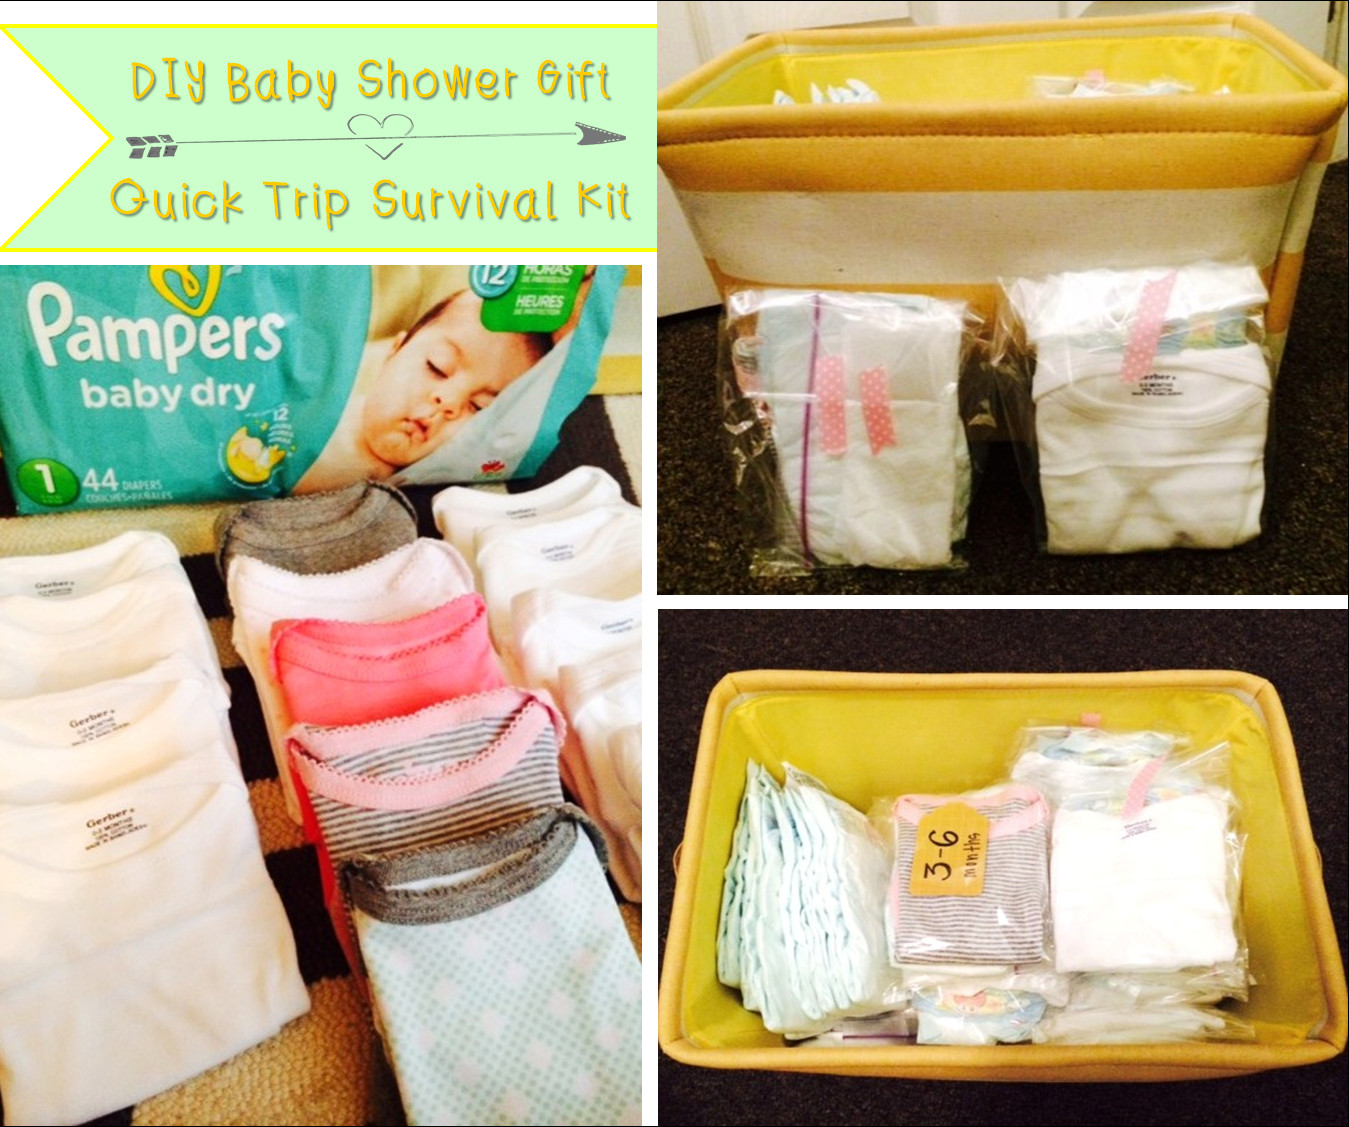 DIY Baby Shower Gift
 Jessica Stout Design DIY Baby Shower Gift Quick Trip